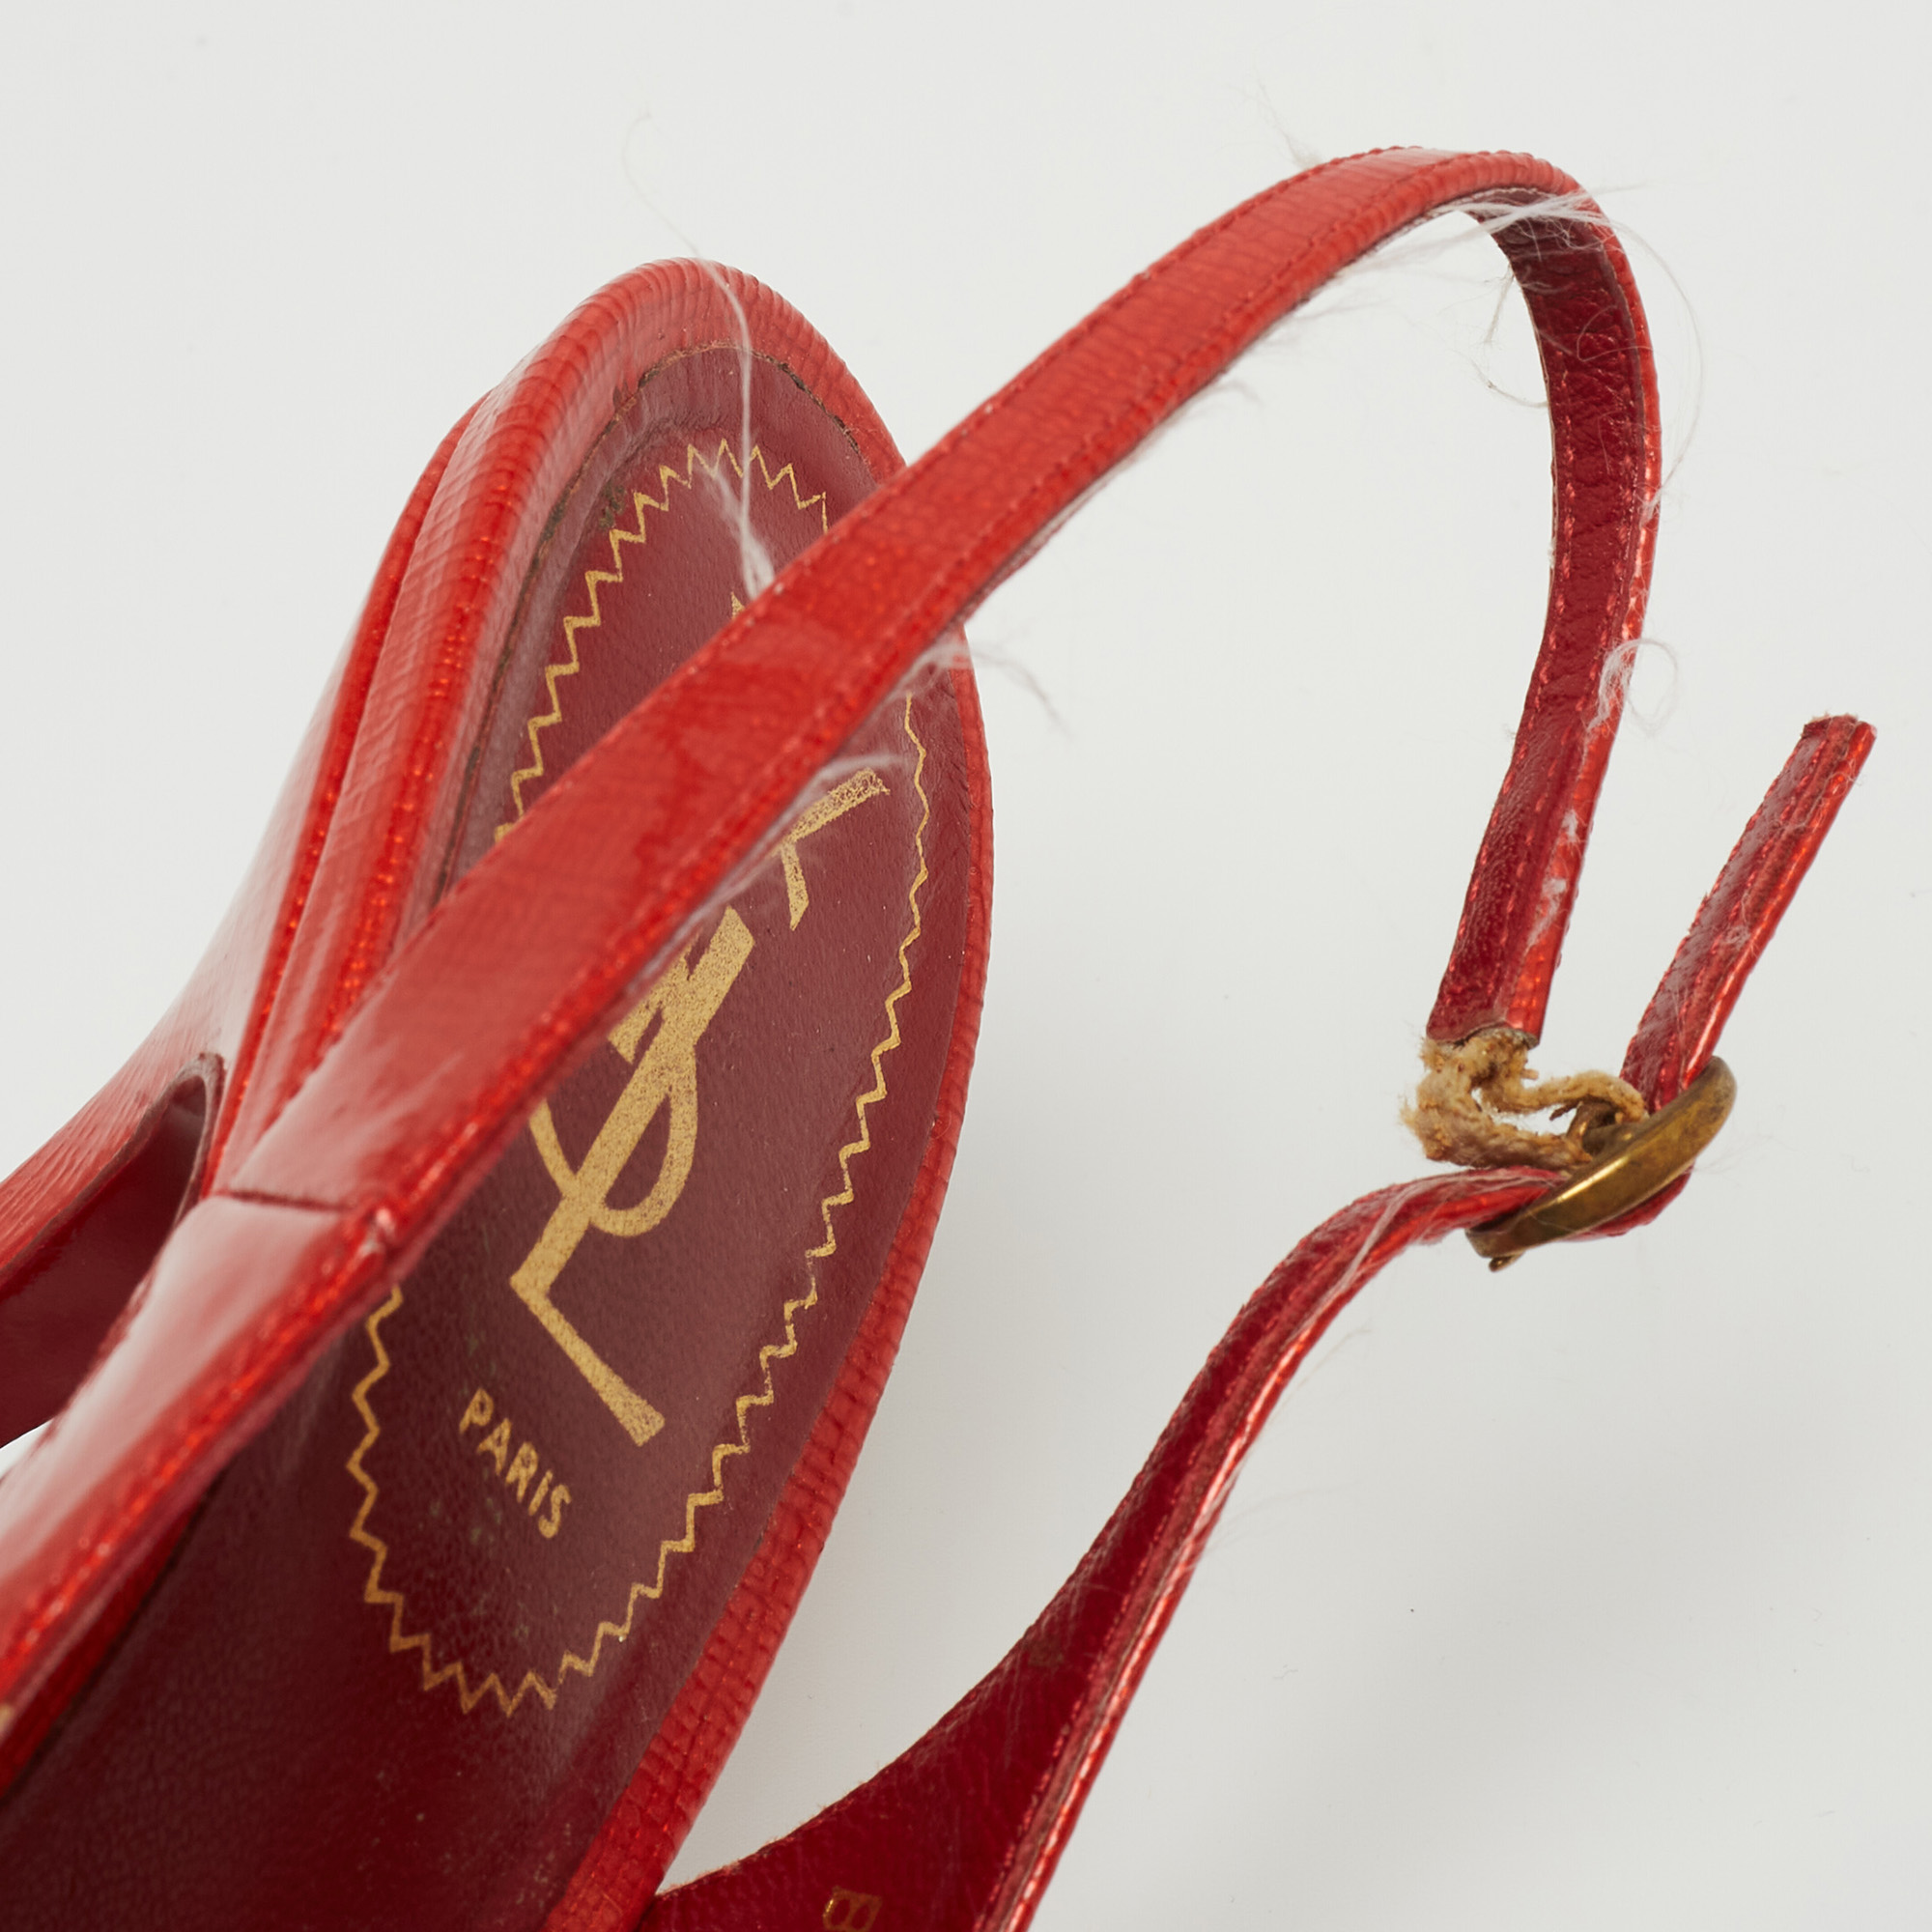 Saint Laurent Red Patent Leather Tribtoo Slingback Pumps Size 37.5